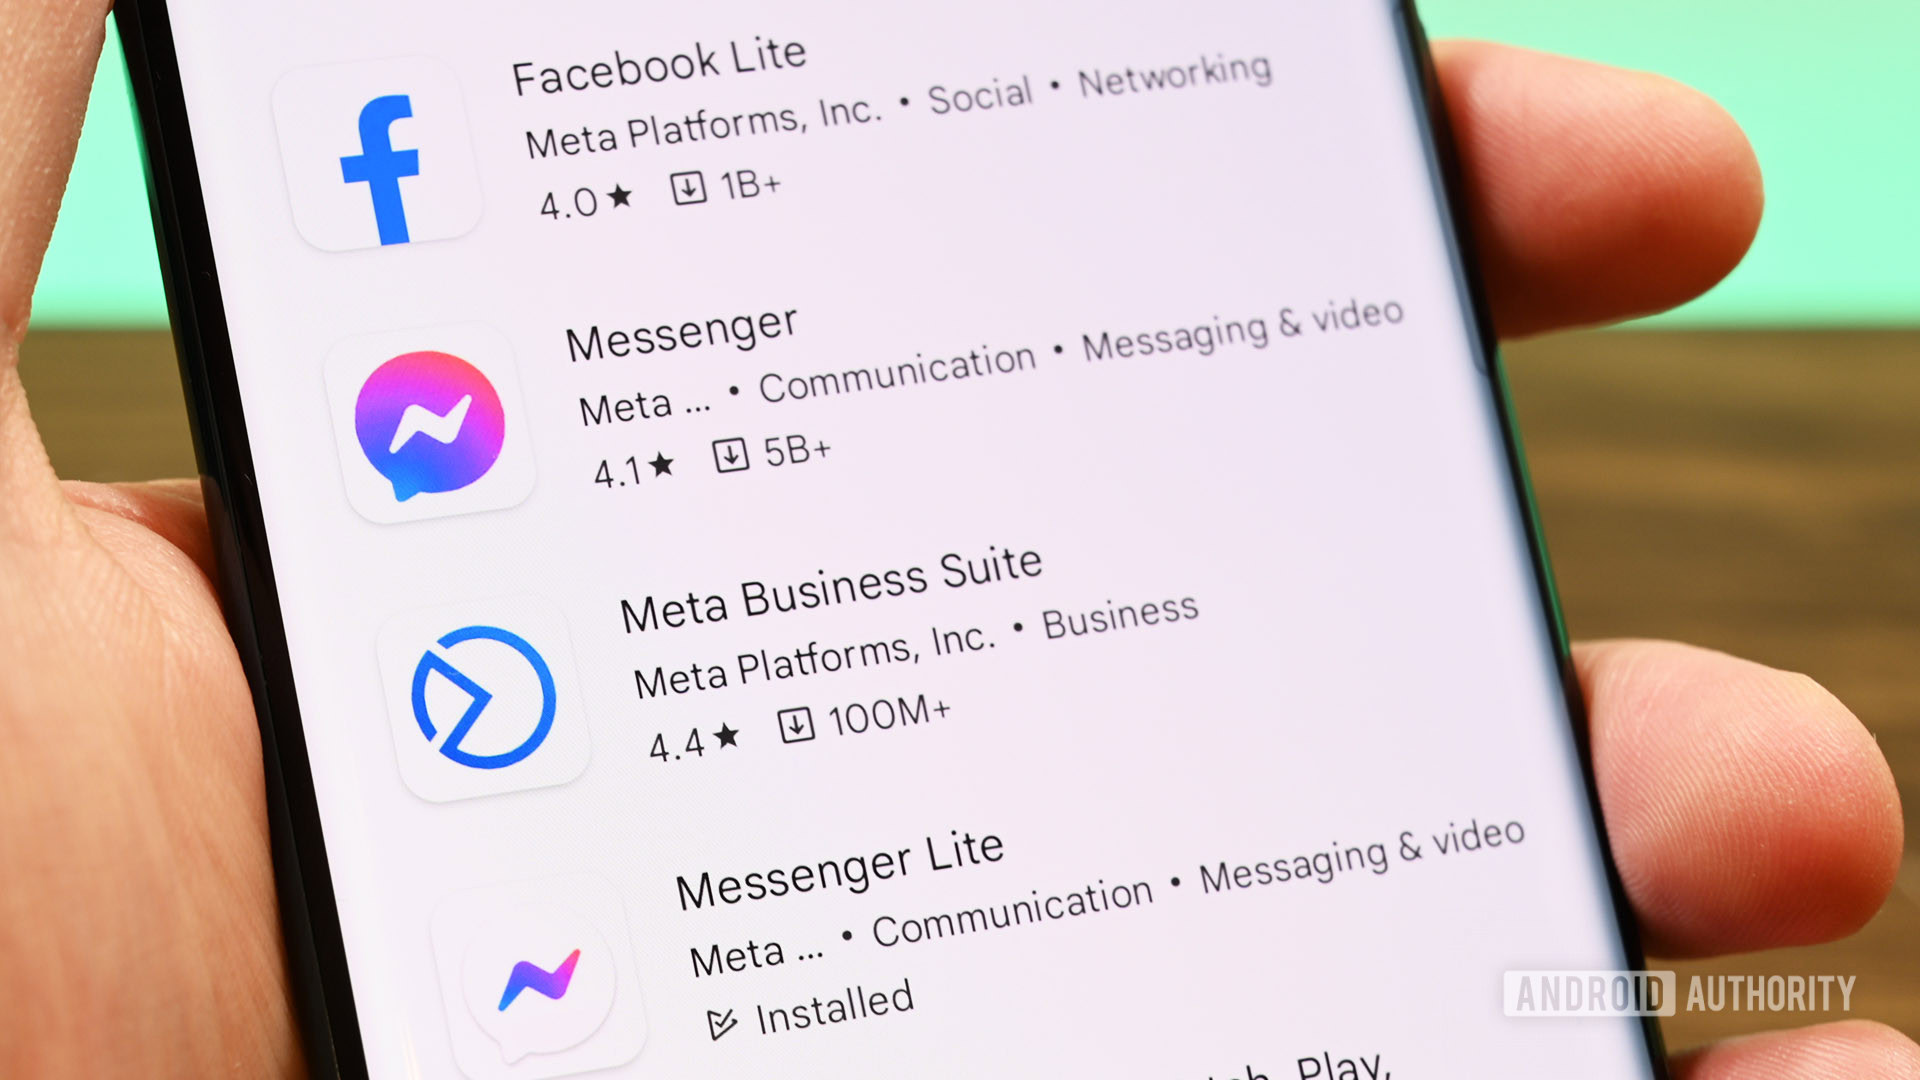 How to Login Facebook on Facebook Lite App? Facebook Lite App 2022